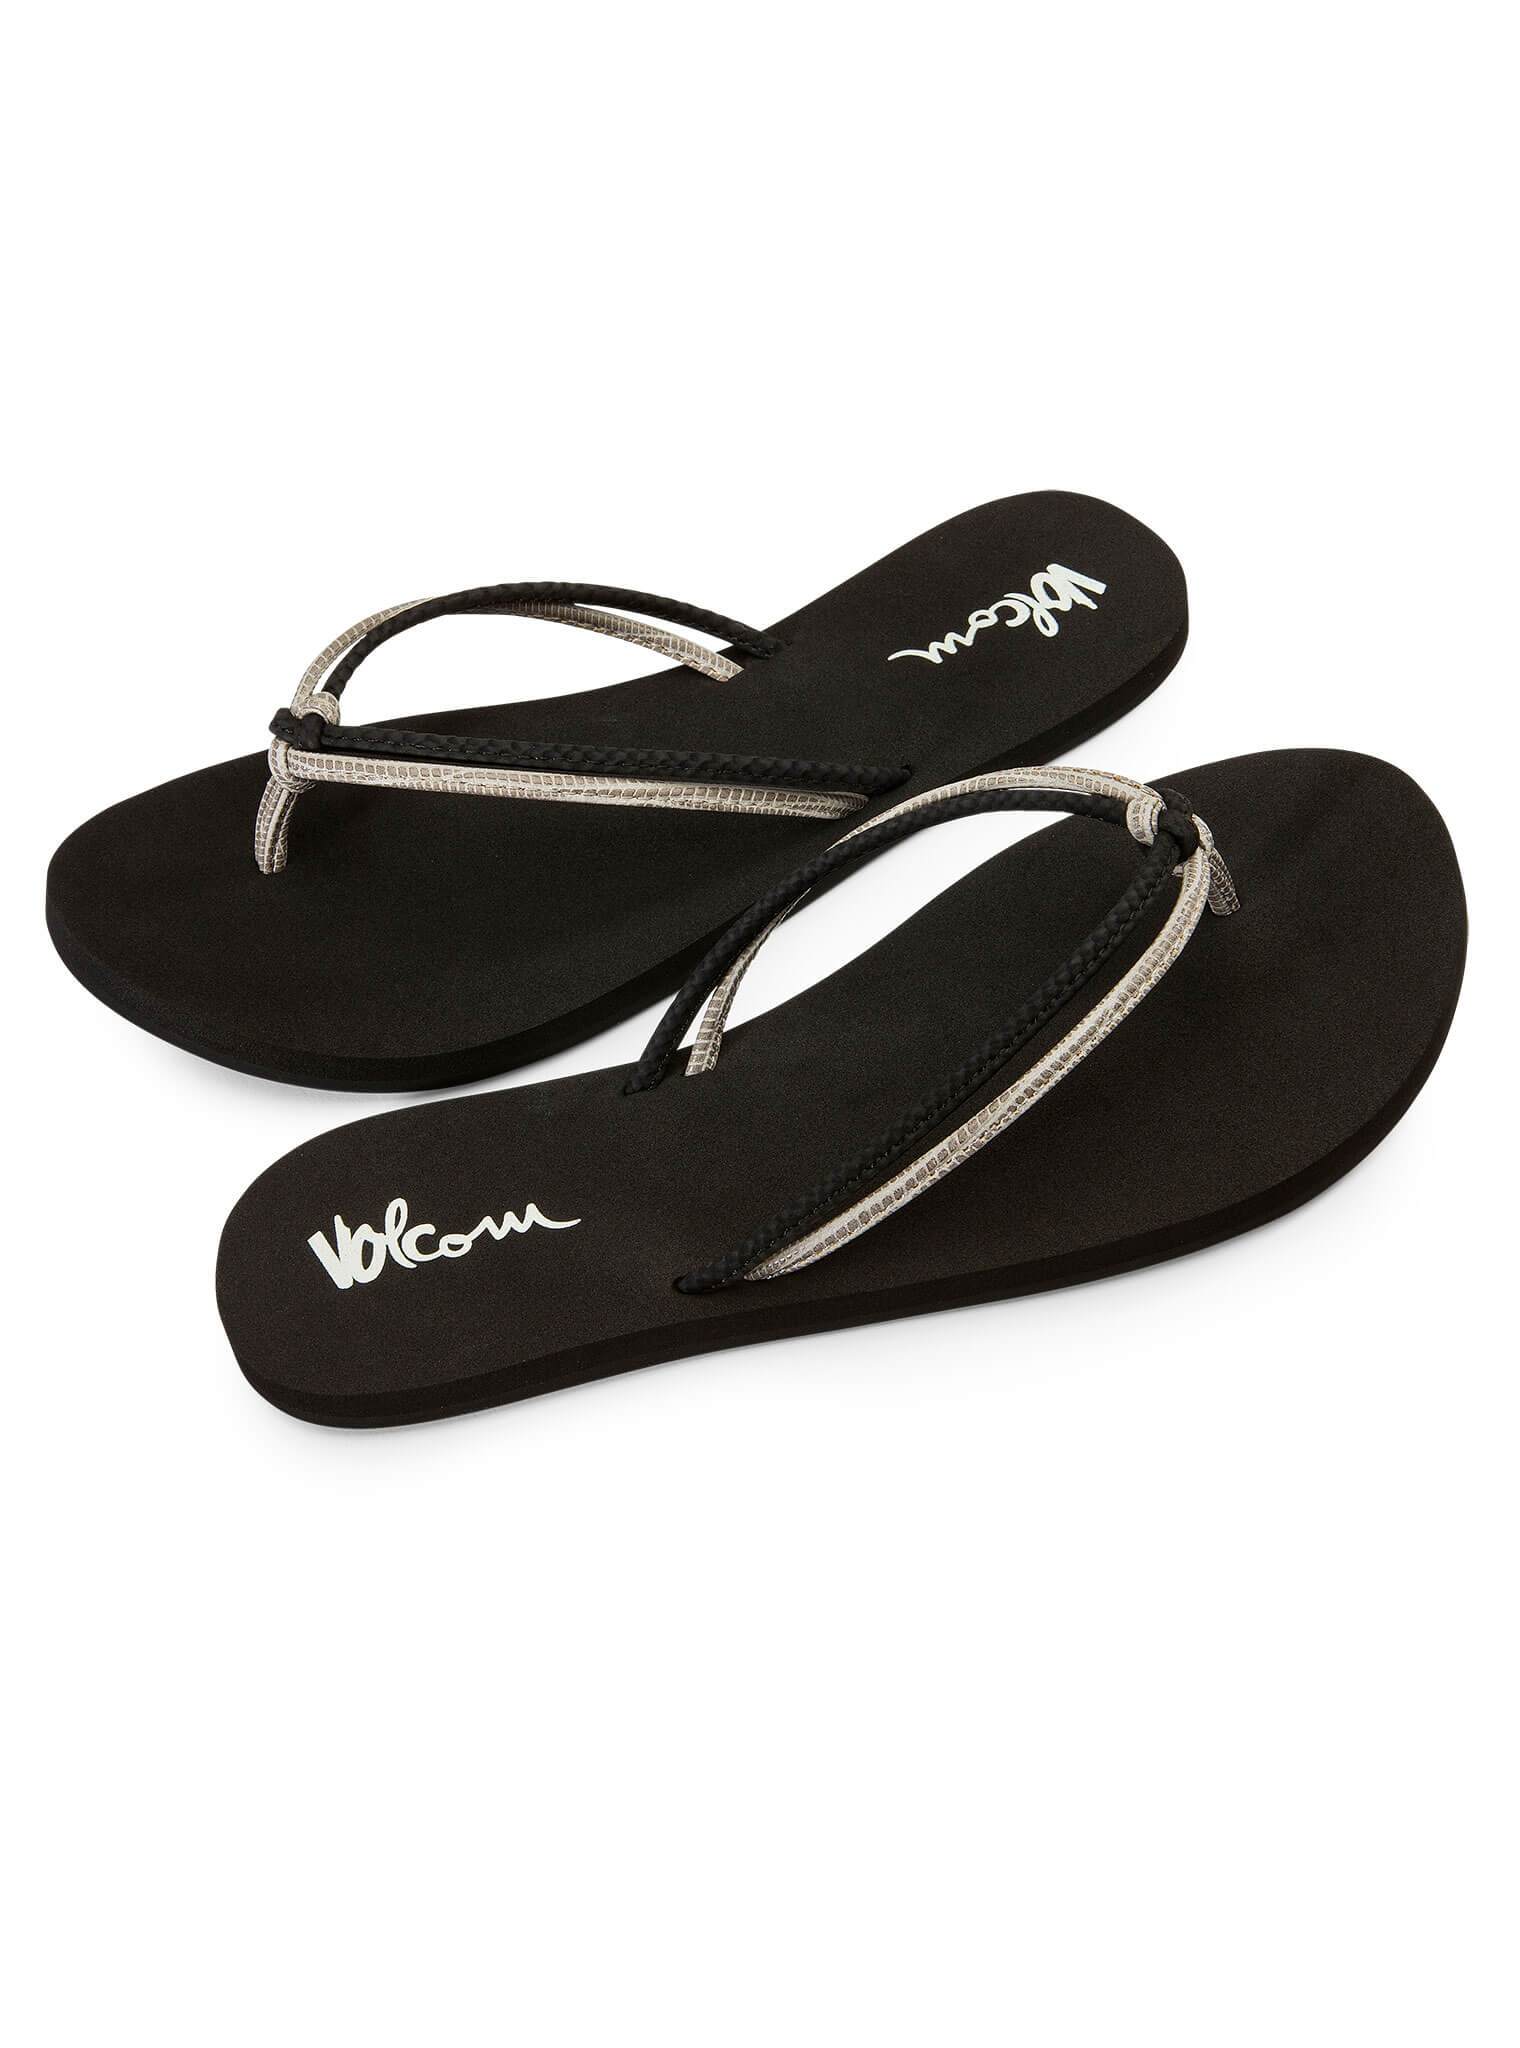 volcom forever and ever sandal